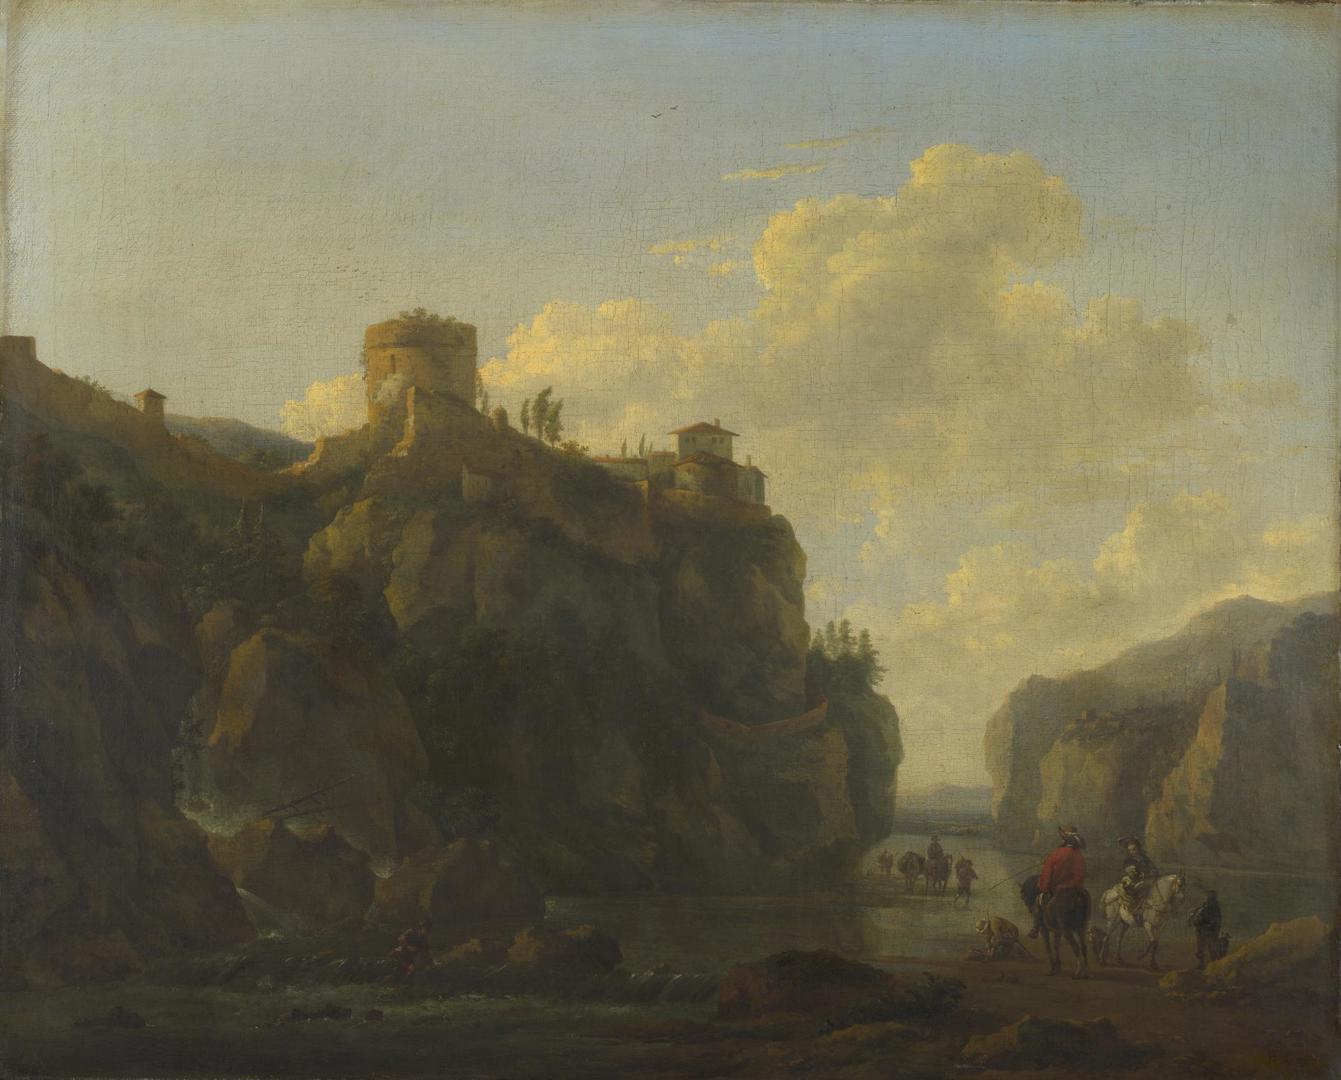 A River between Rocky Cliffs by Lodewijck van Ludick